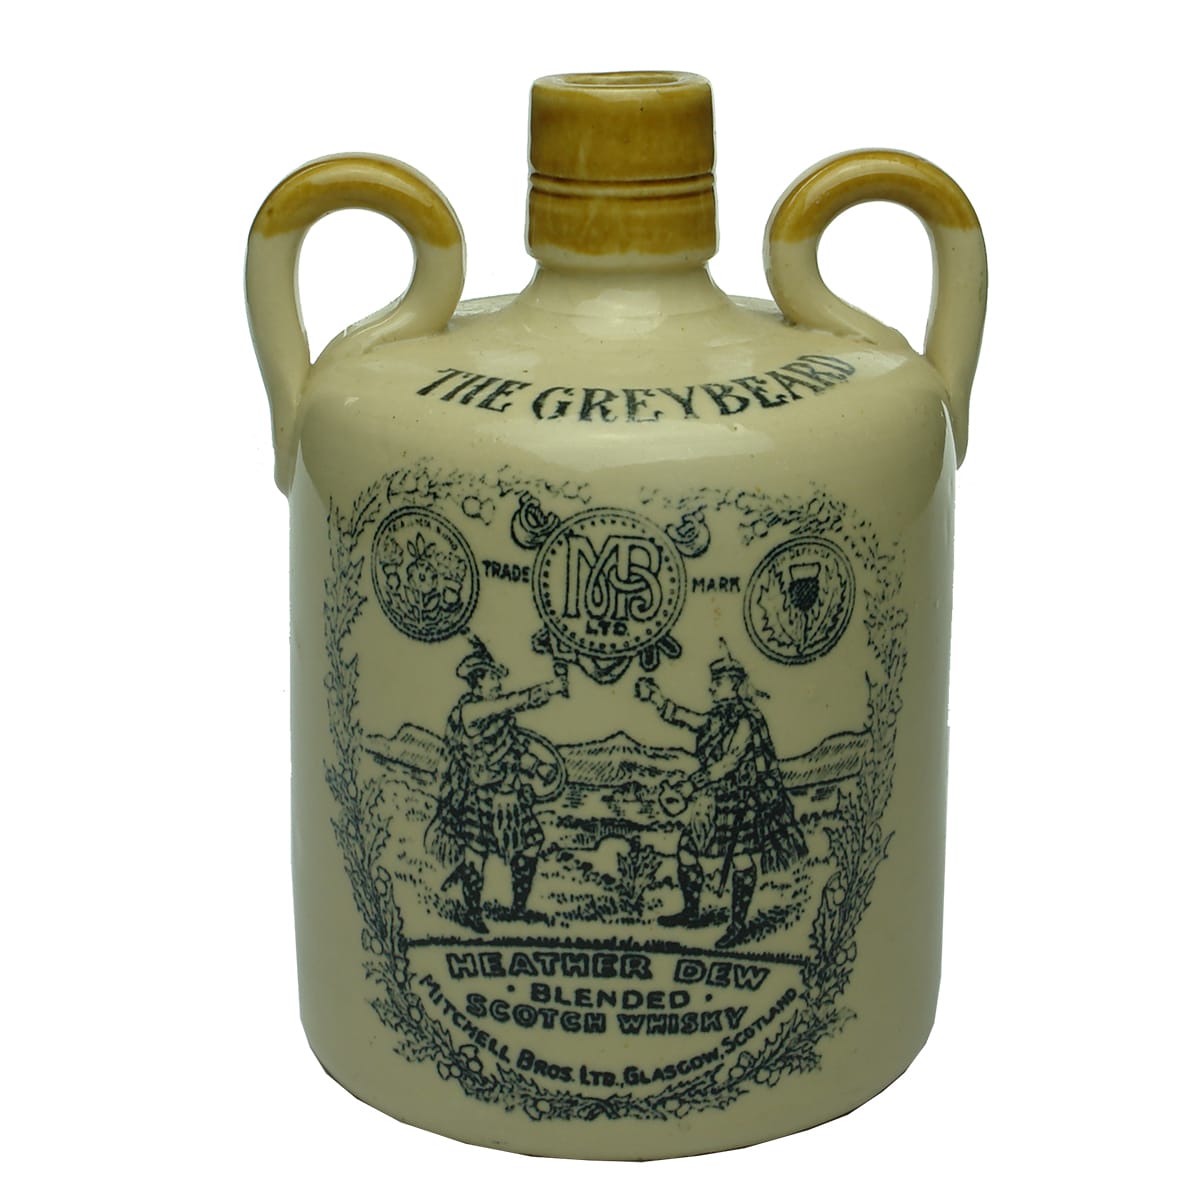 Whisky. The Greybeard. Mitchell Bros. Ltd, Glasgow. Possil Pottery, Jug.